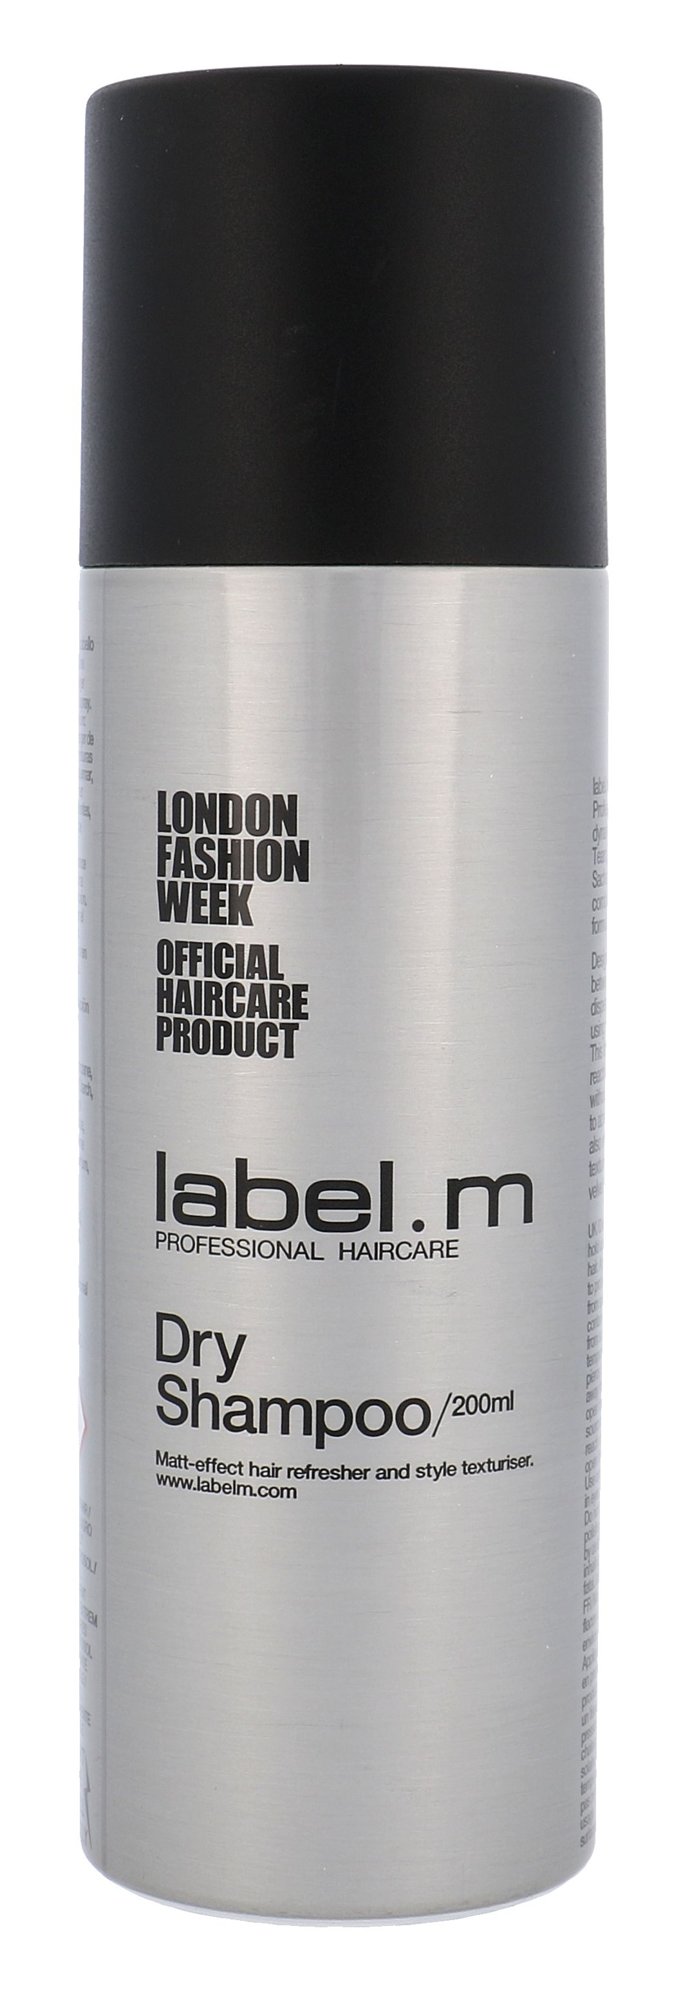 Label m Dry Shampoo